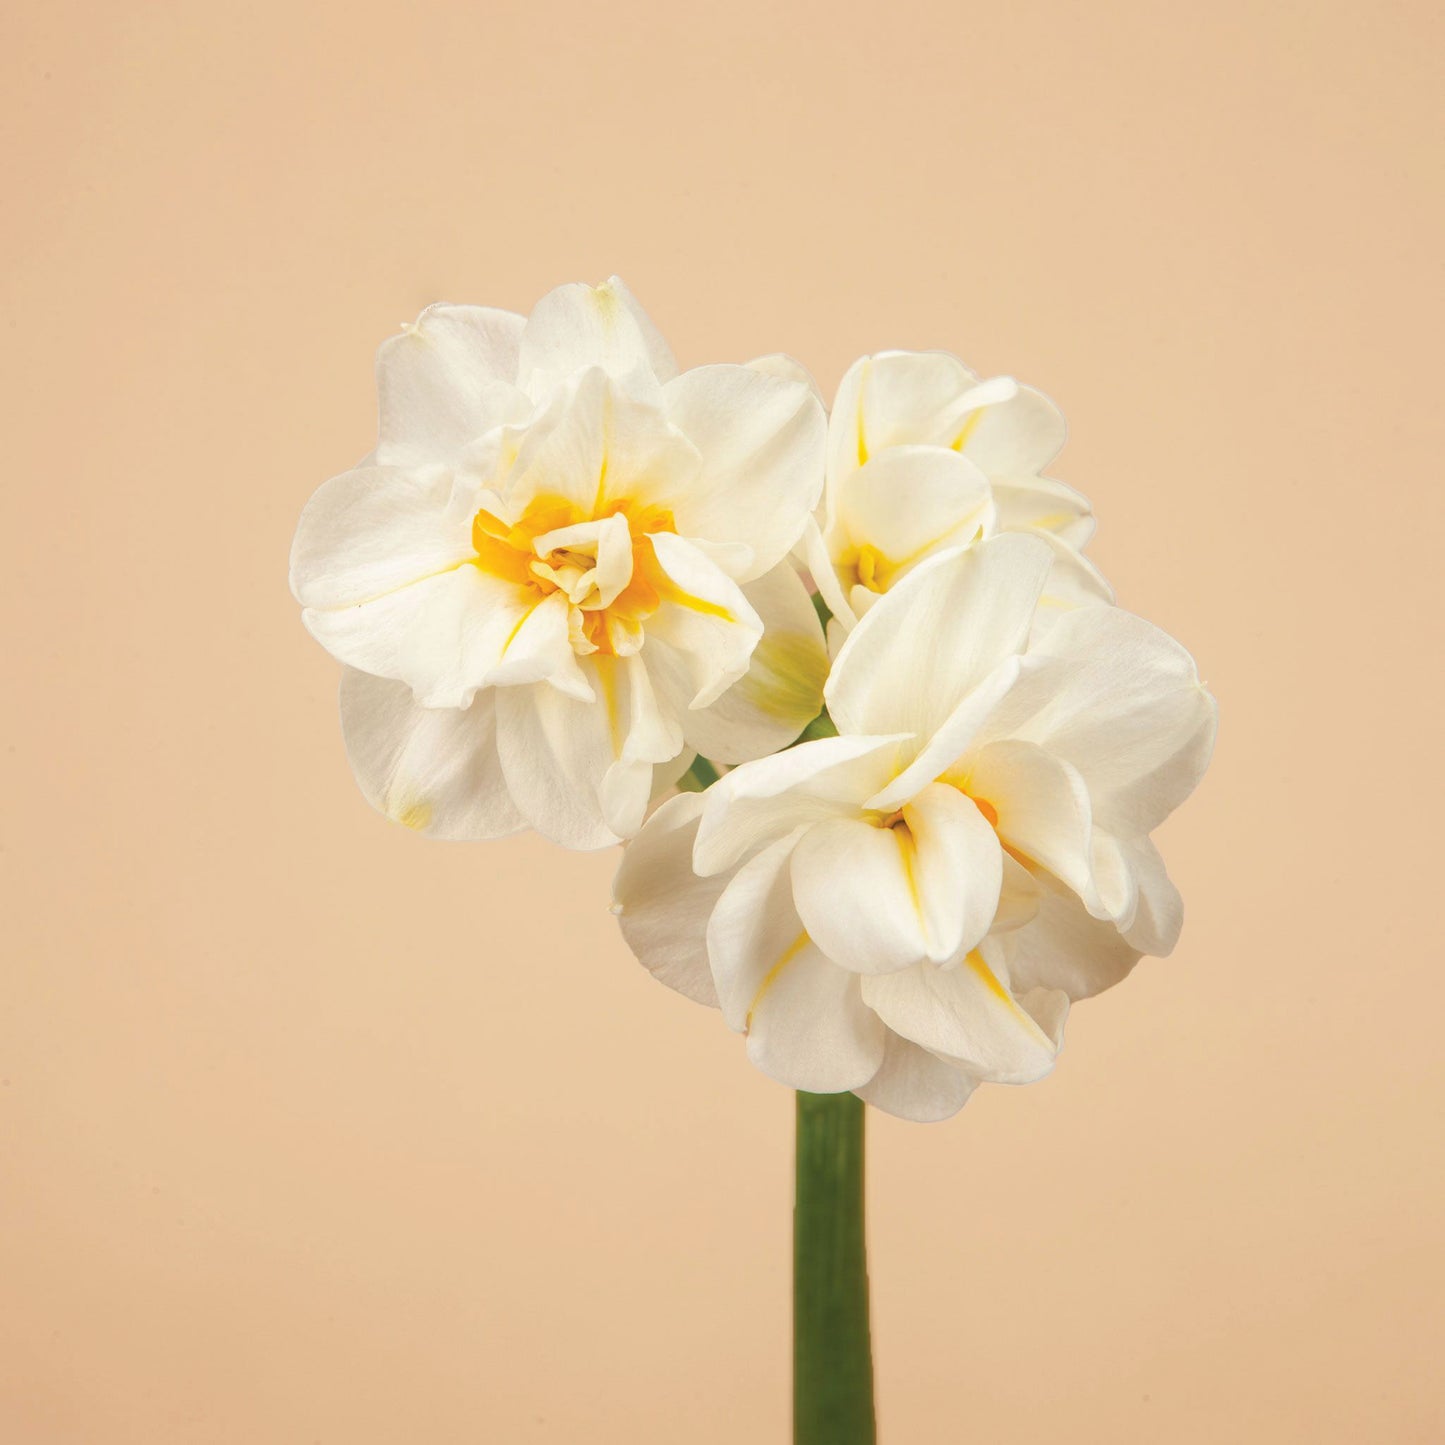 Sir Winston Churchill Daffodil Bulbs